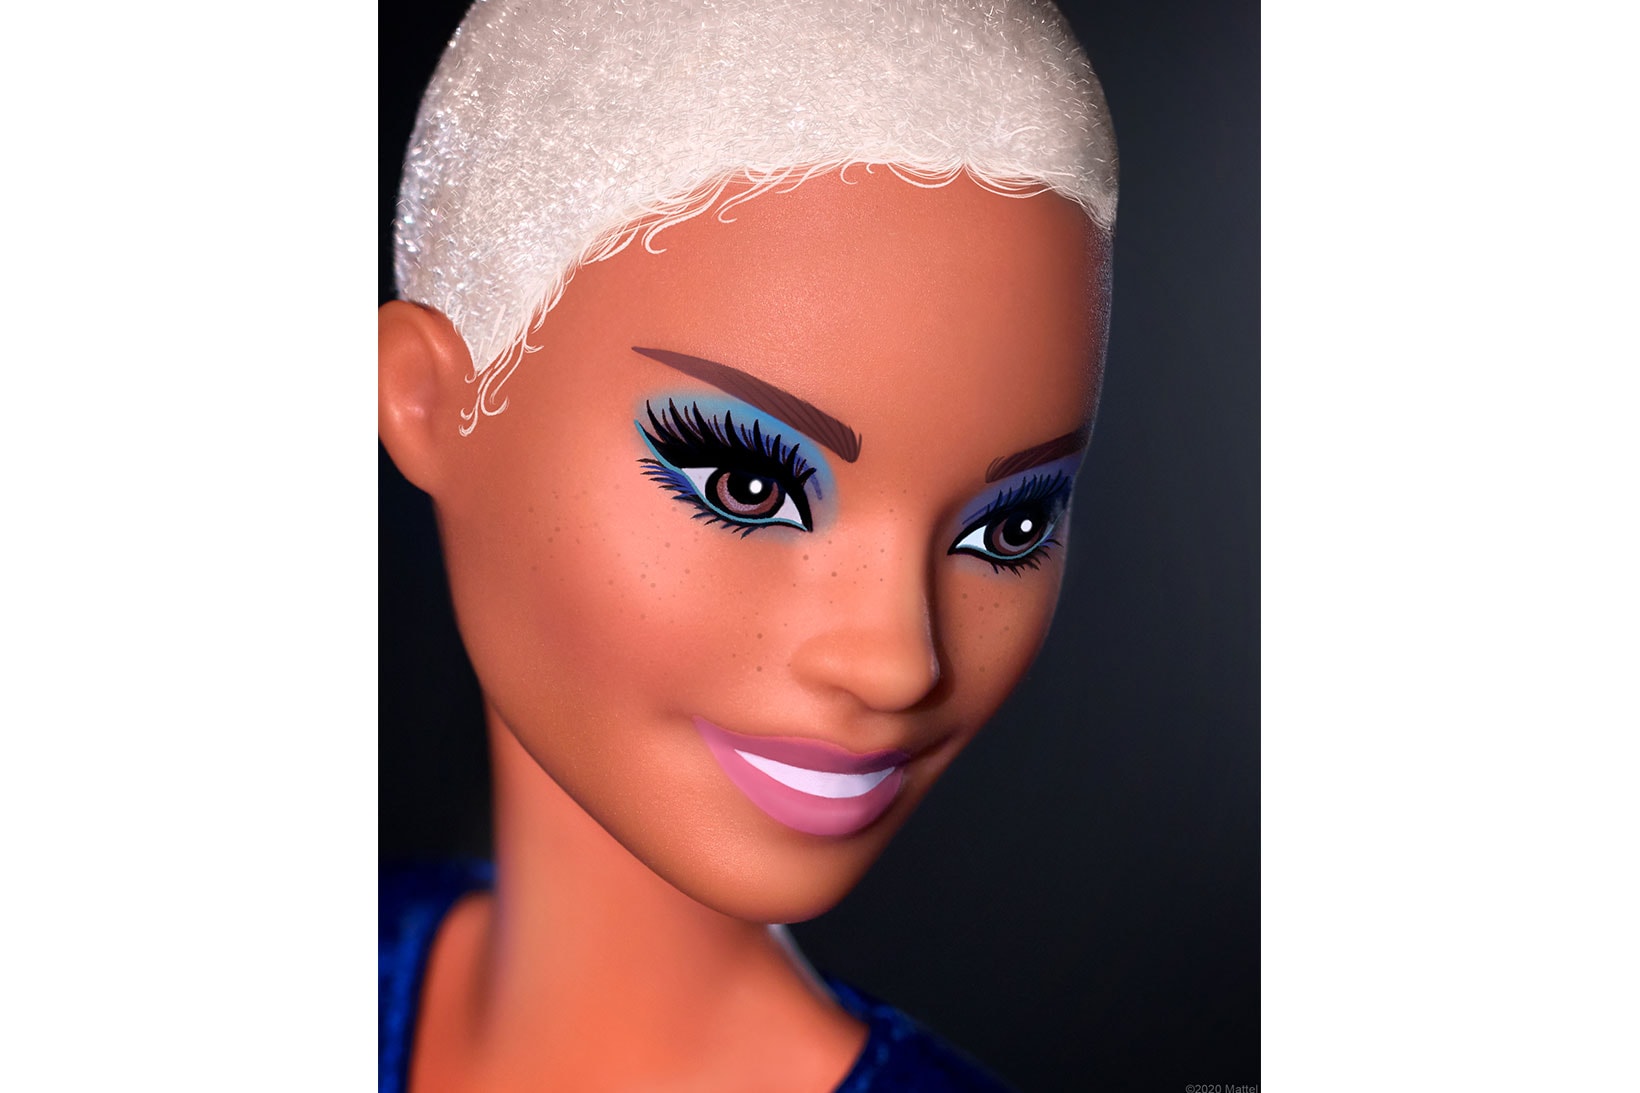 barbie dolls sir john makeup artist beauty editorial collaboration diversity campaign mattel